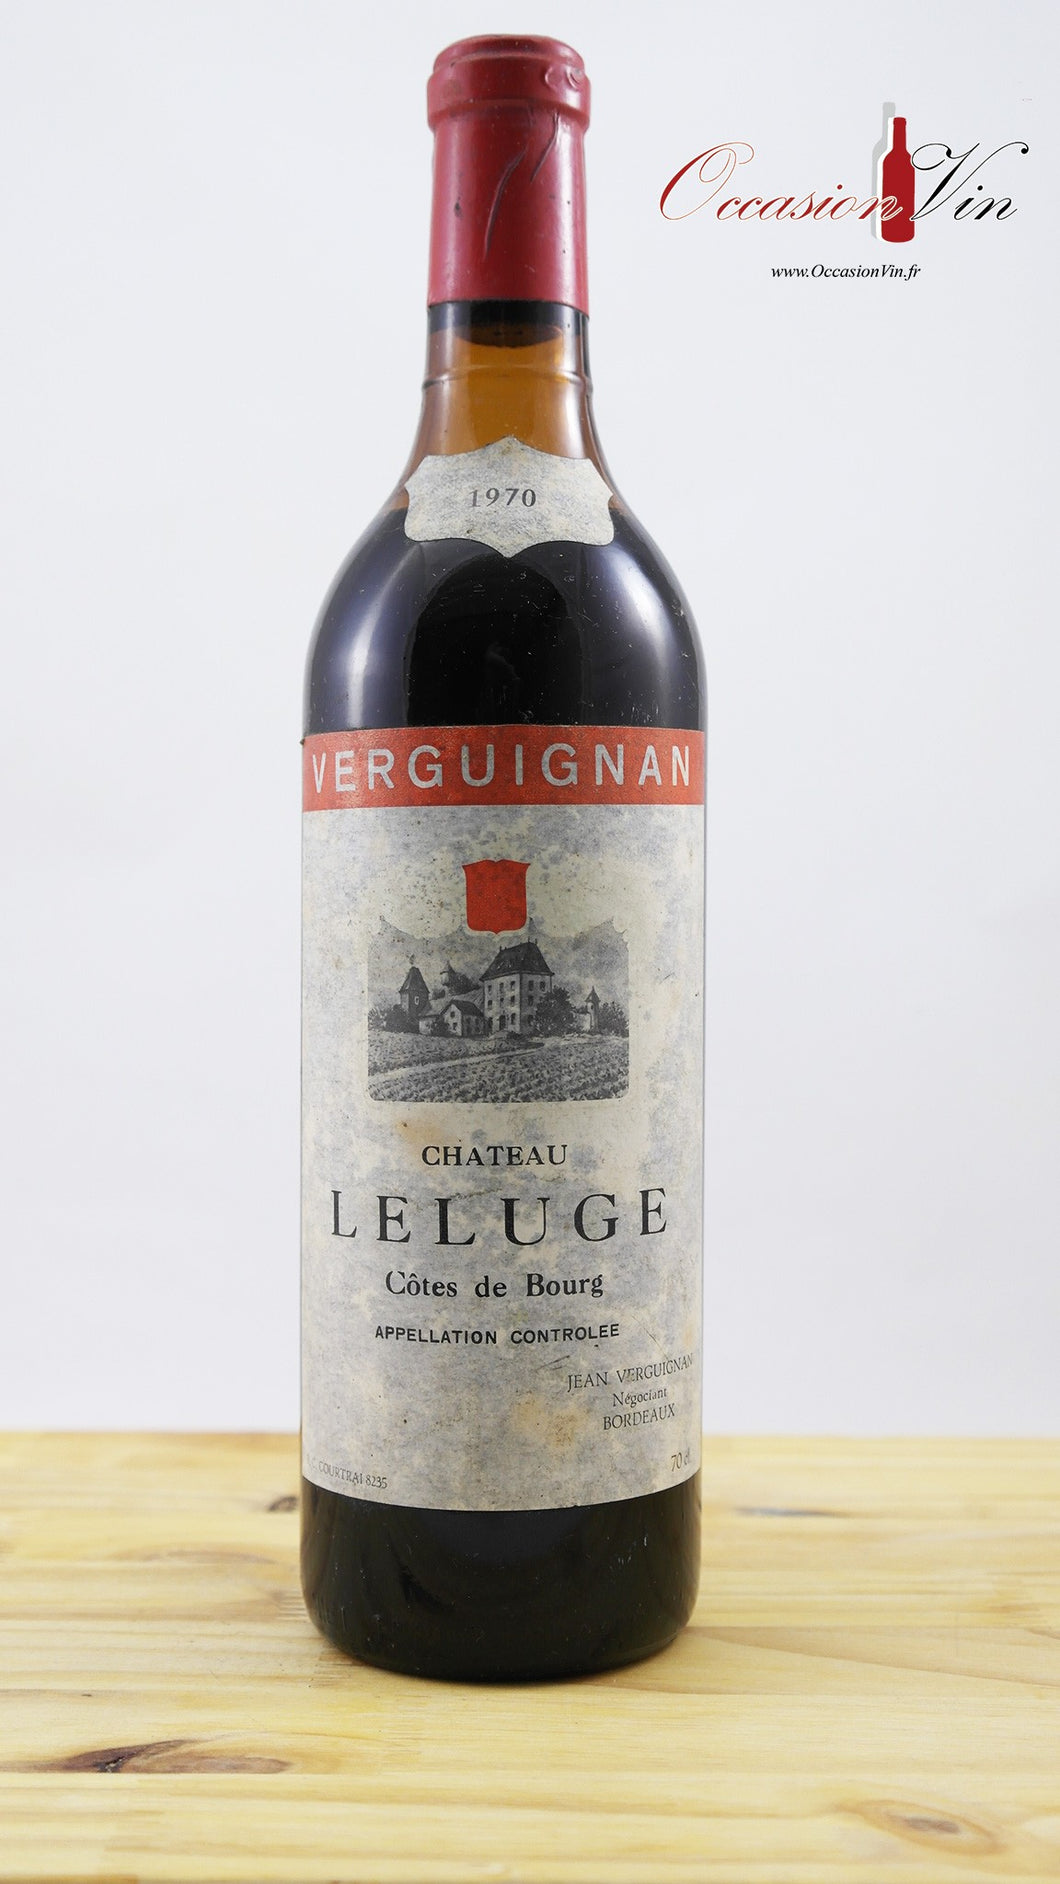 Château Leluge Vin 1970